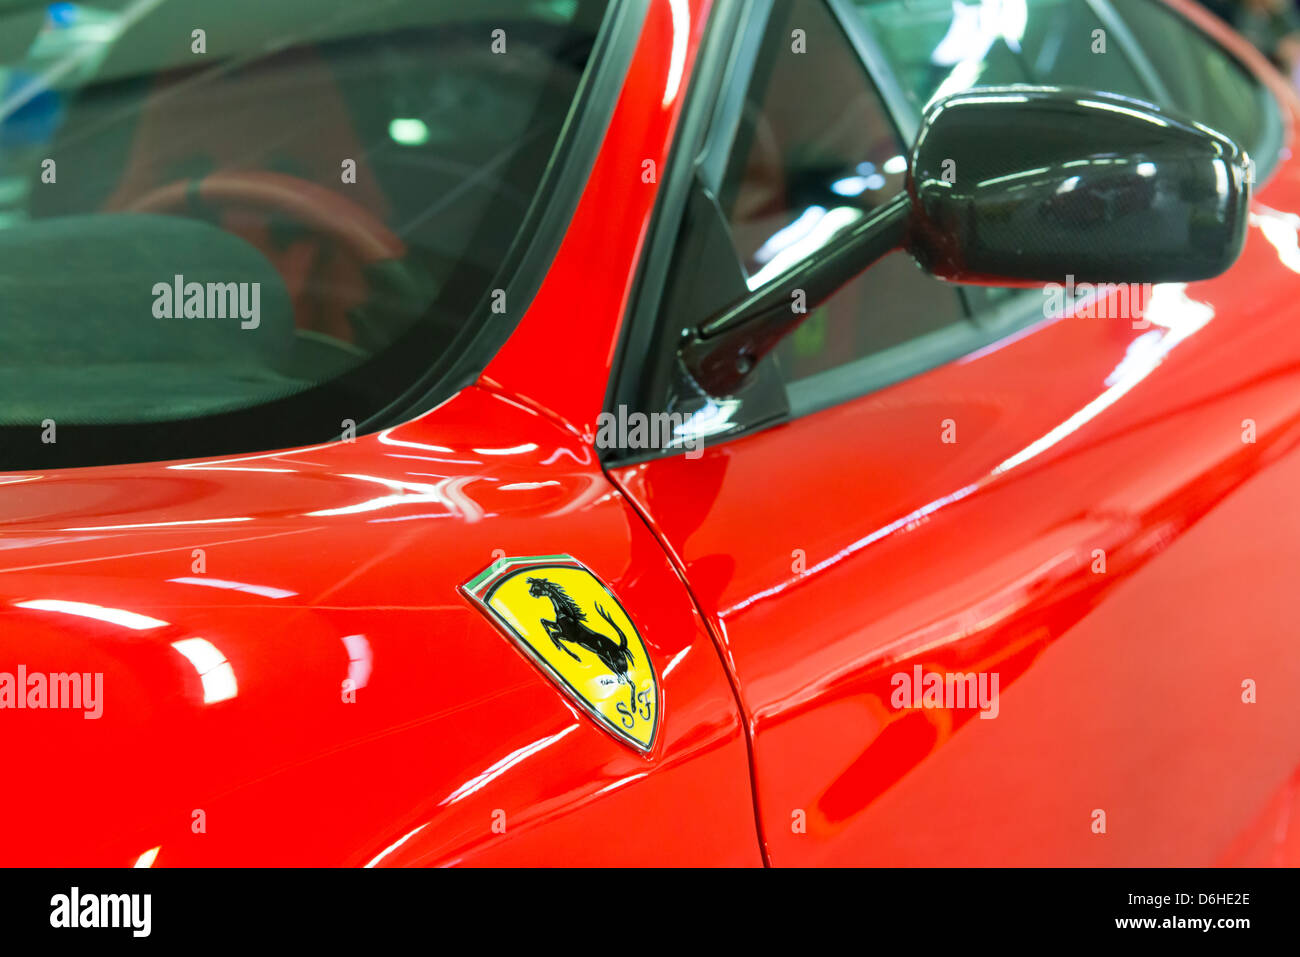 A carticular of  Ferrari sport car Stock Photo